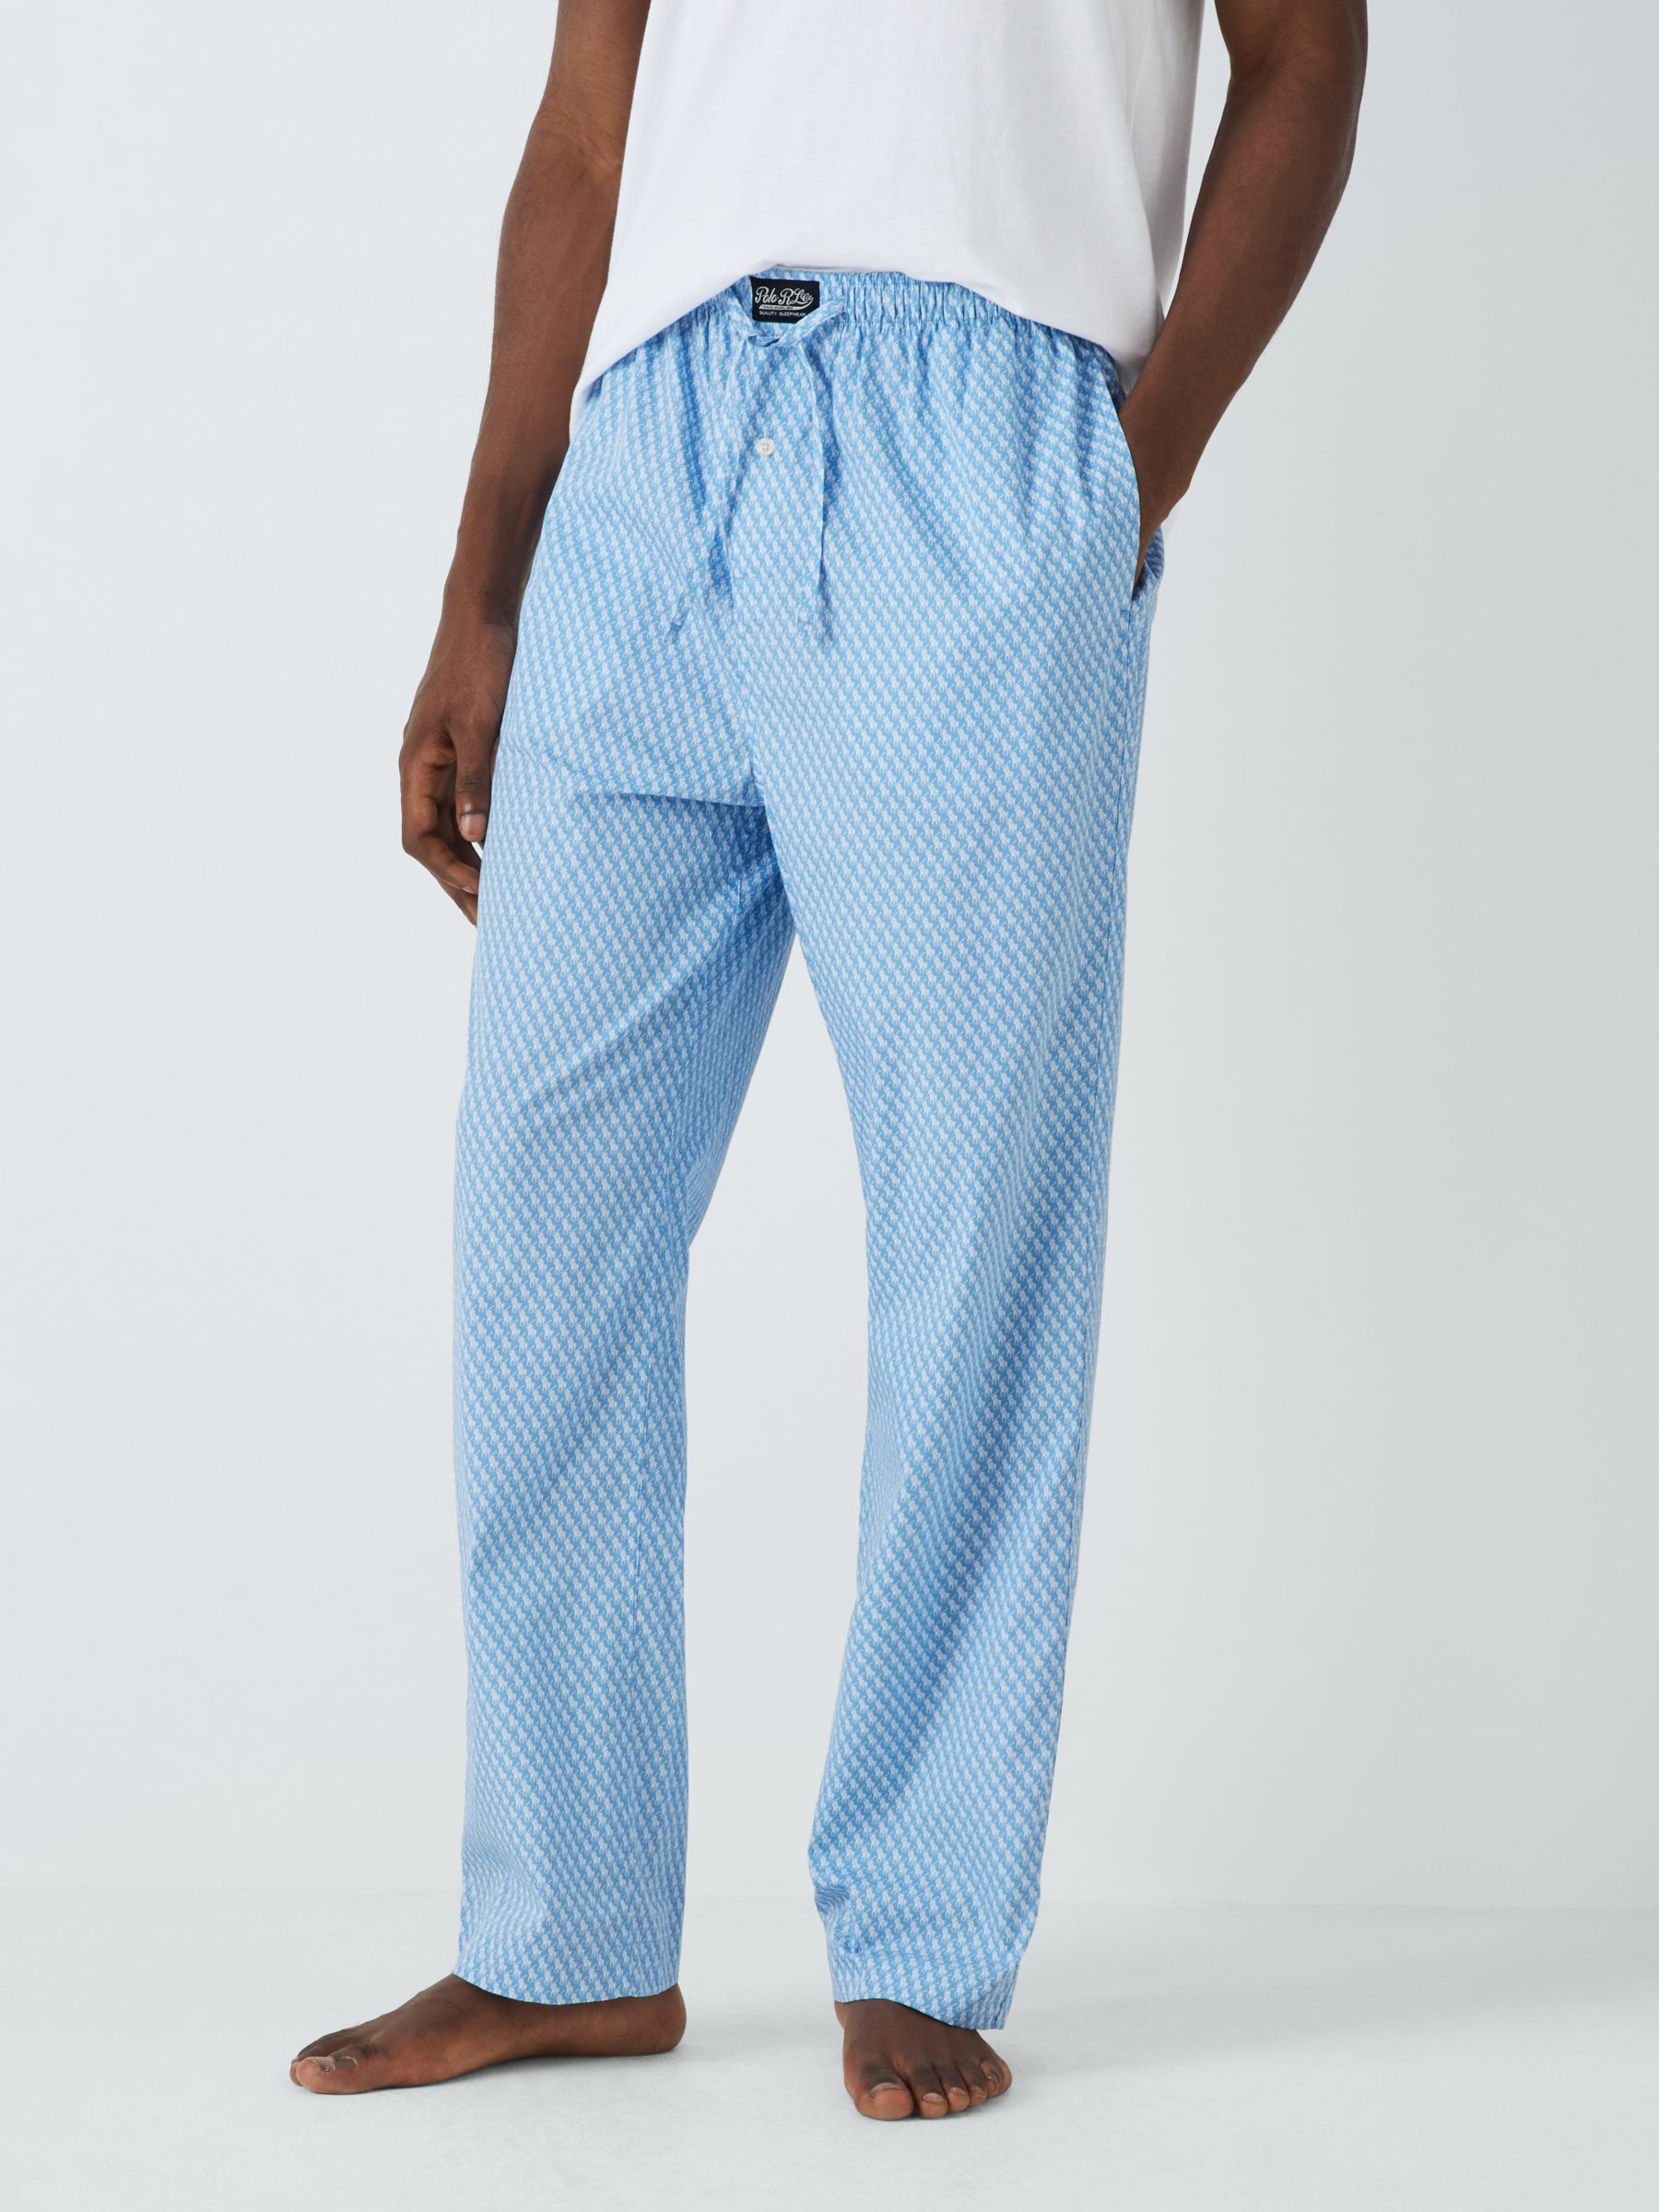 Polo Ralph Lauren Cotton Pyjama Bottoms, Sky Blue/White, S